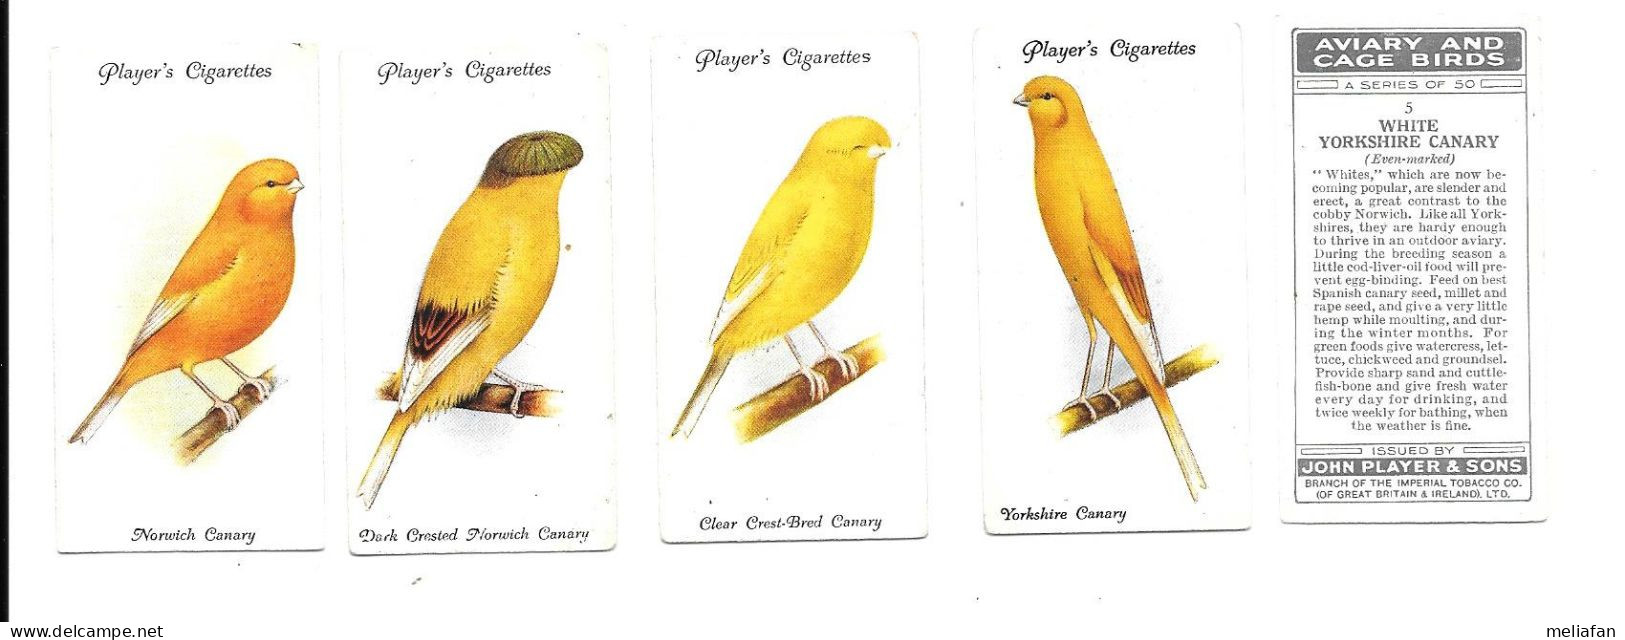 CJ29 - SERIE COMPLETE 50 CARTES CIGARETTES PLAYERS - AVIARY AND CAGE BIRDS - CANARIS ET OISEAUX DE CAGE - Player's